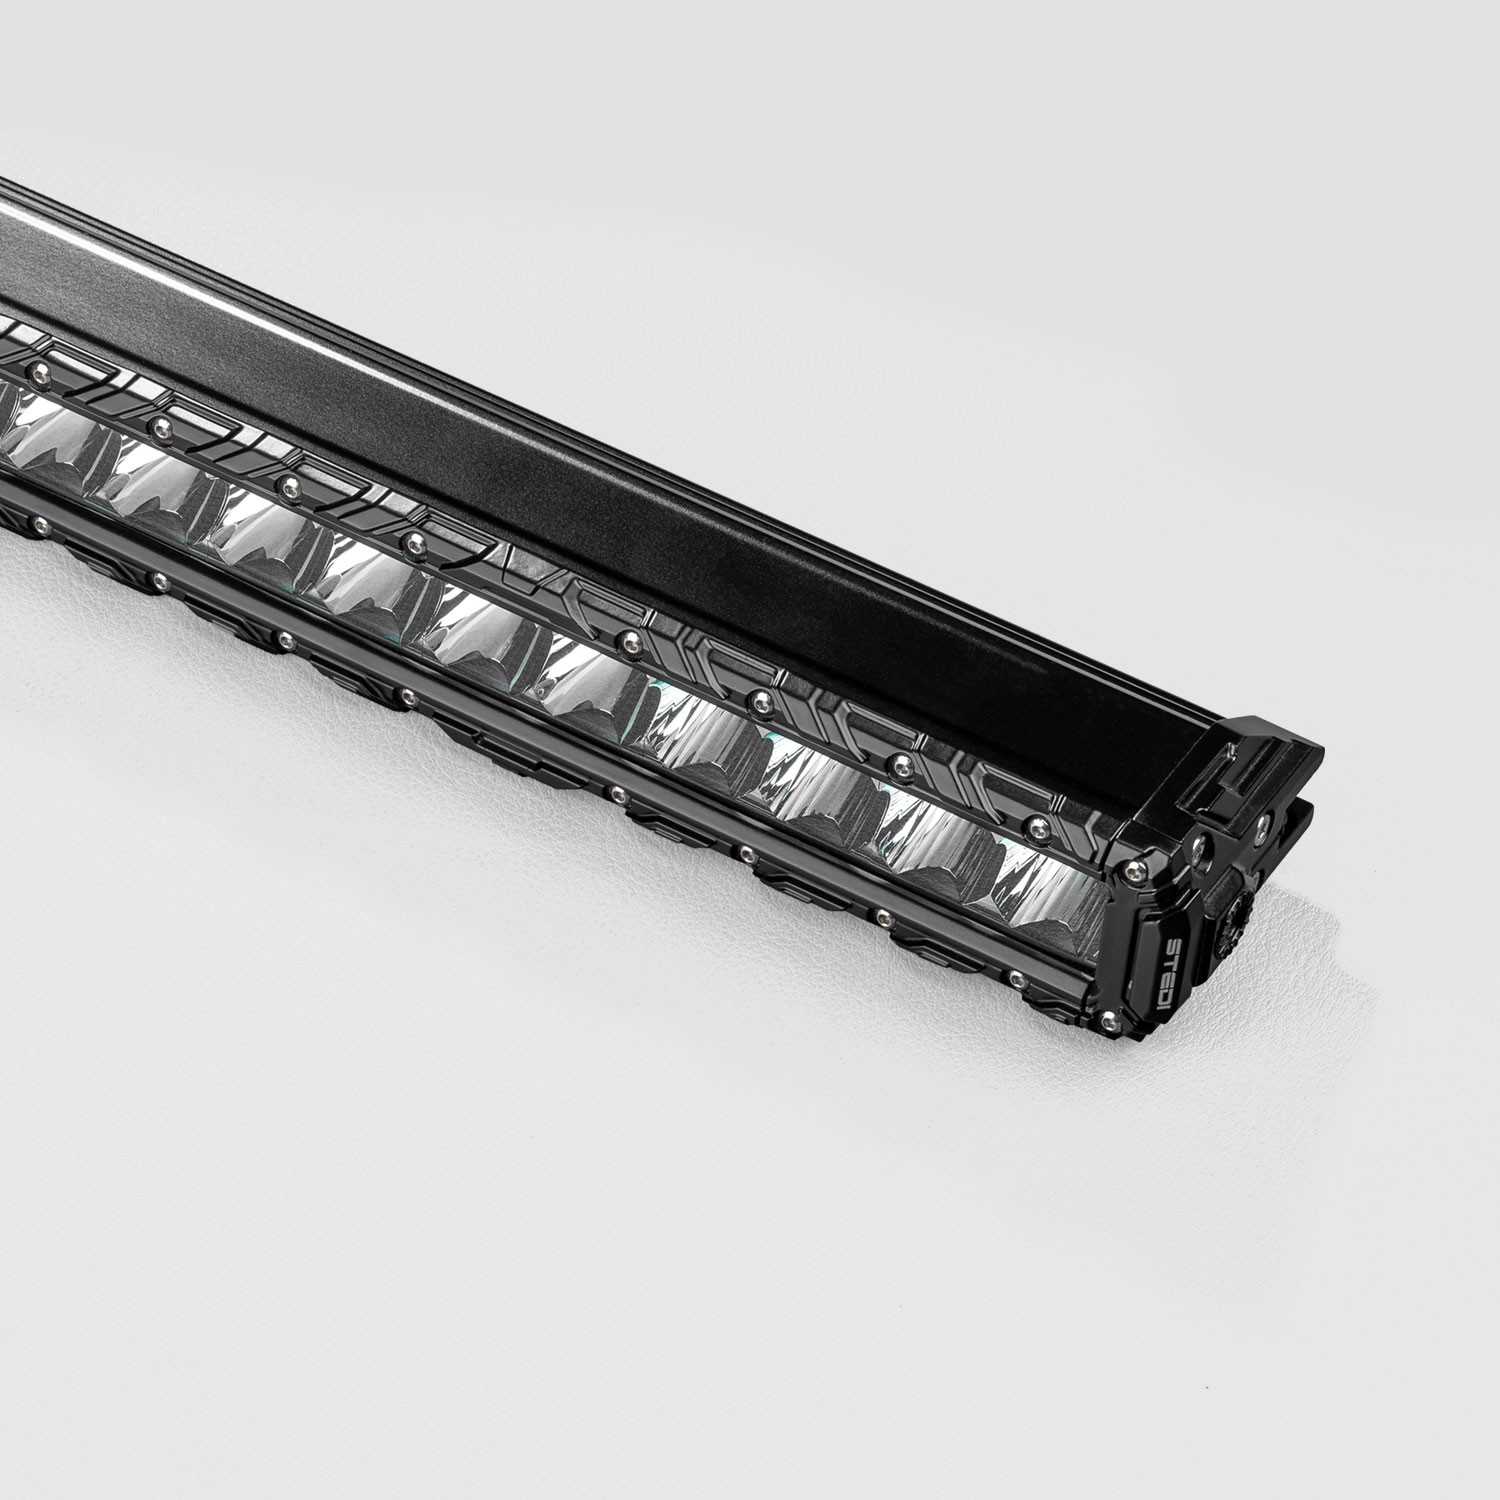  ST3K 41.5 inch 40 LED Slim LED Light Bar